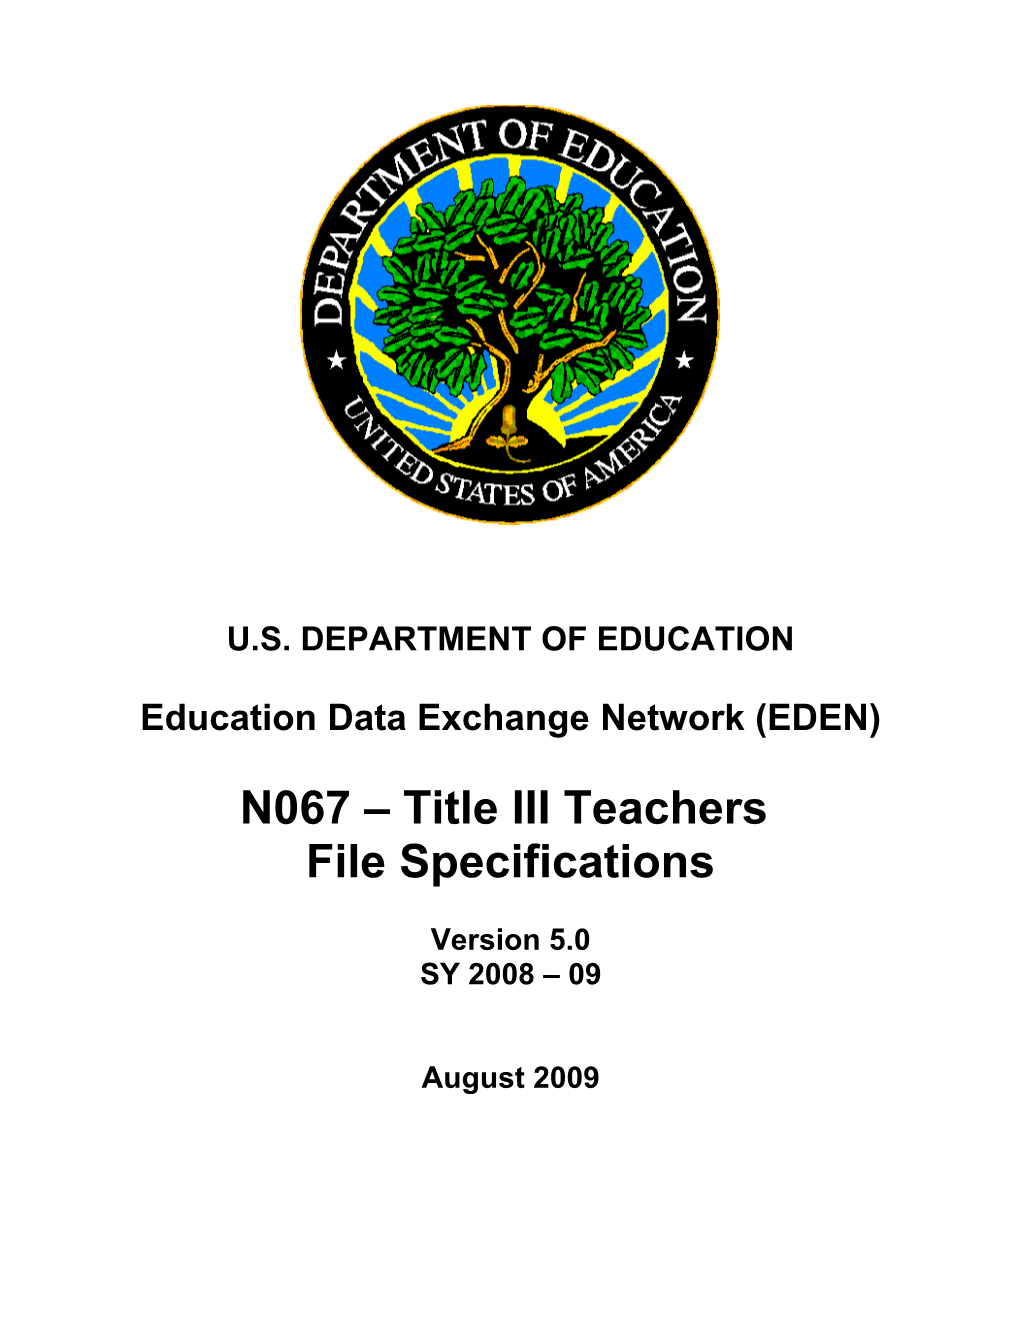 Title III Teachers File Specifications